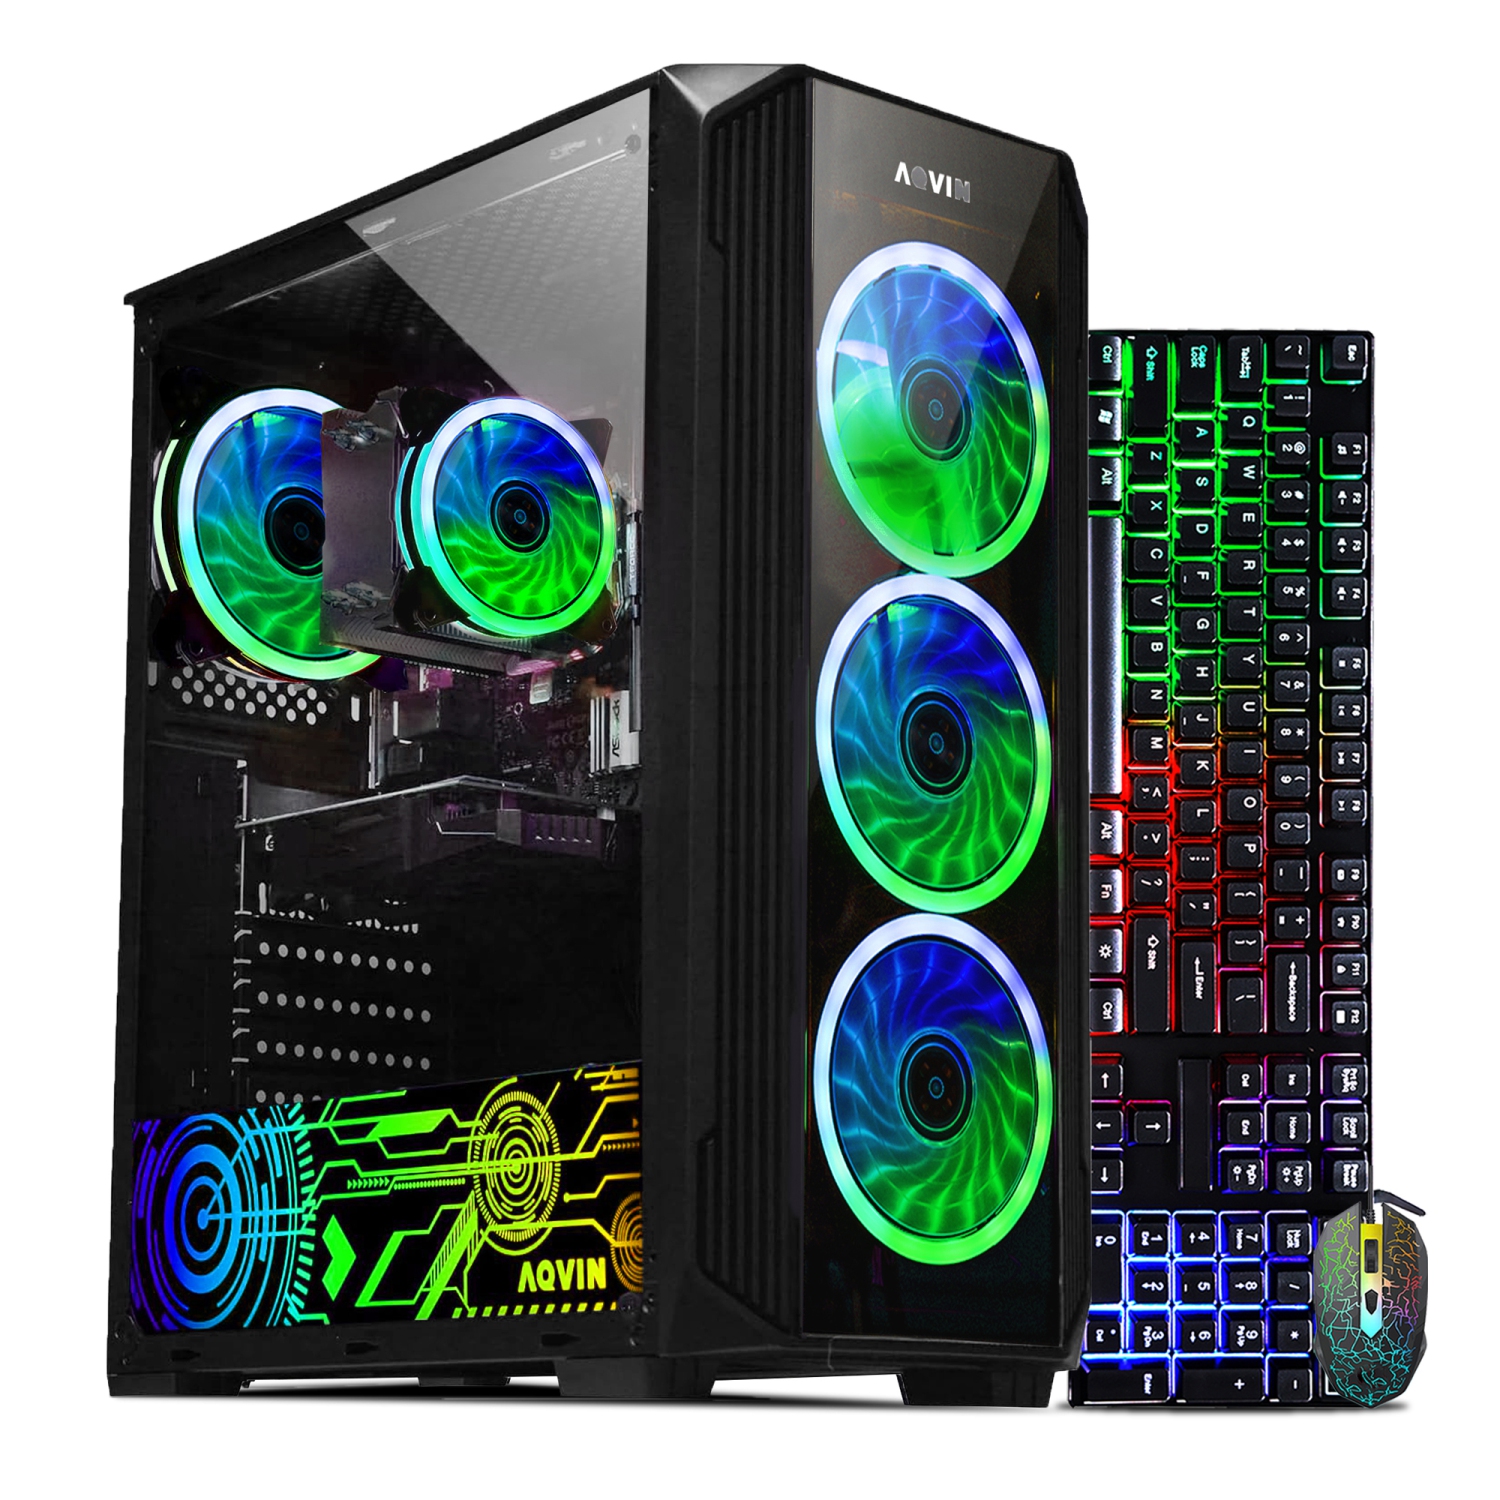 Refurbished (Excellent) AQVIN ZForce Tower Gaming Desktop Computer, Intel Core i7, GeForce RTX 3050 8GB, 512GB SSD + 2TB HDD, 32GB DDR4 RAM, Windows 10 Pro